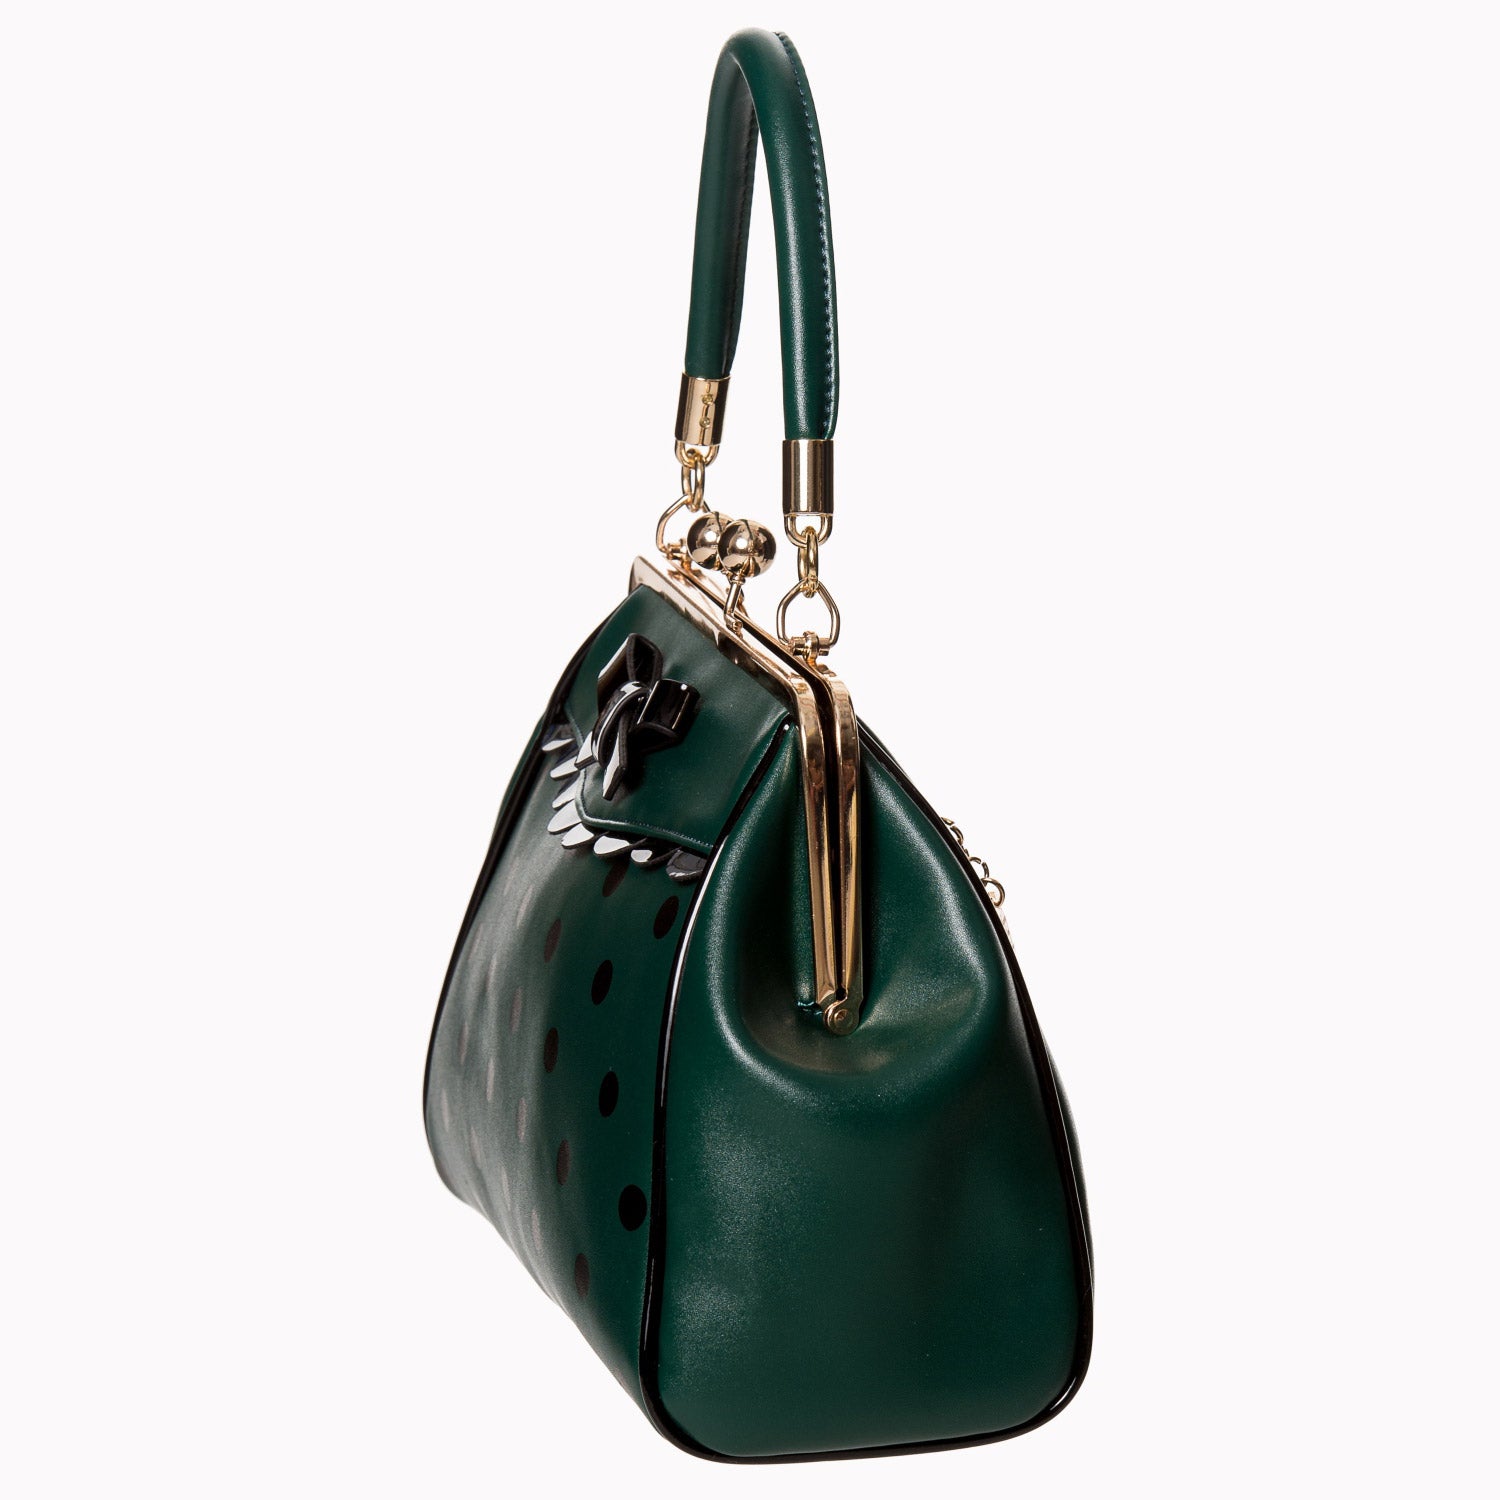 Green and Black Vintage Polka Dot Handbag - Pretty Kitty Fashion